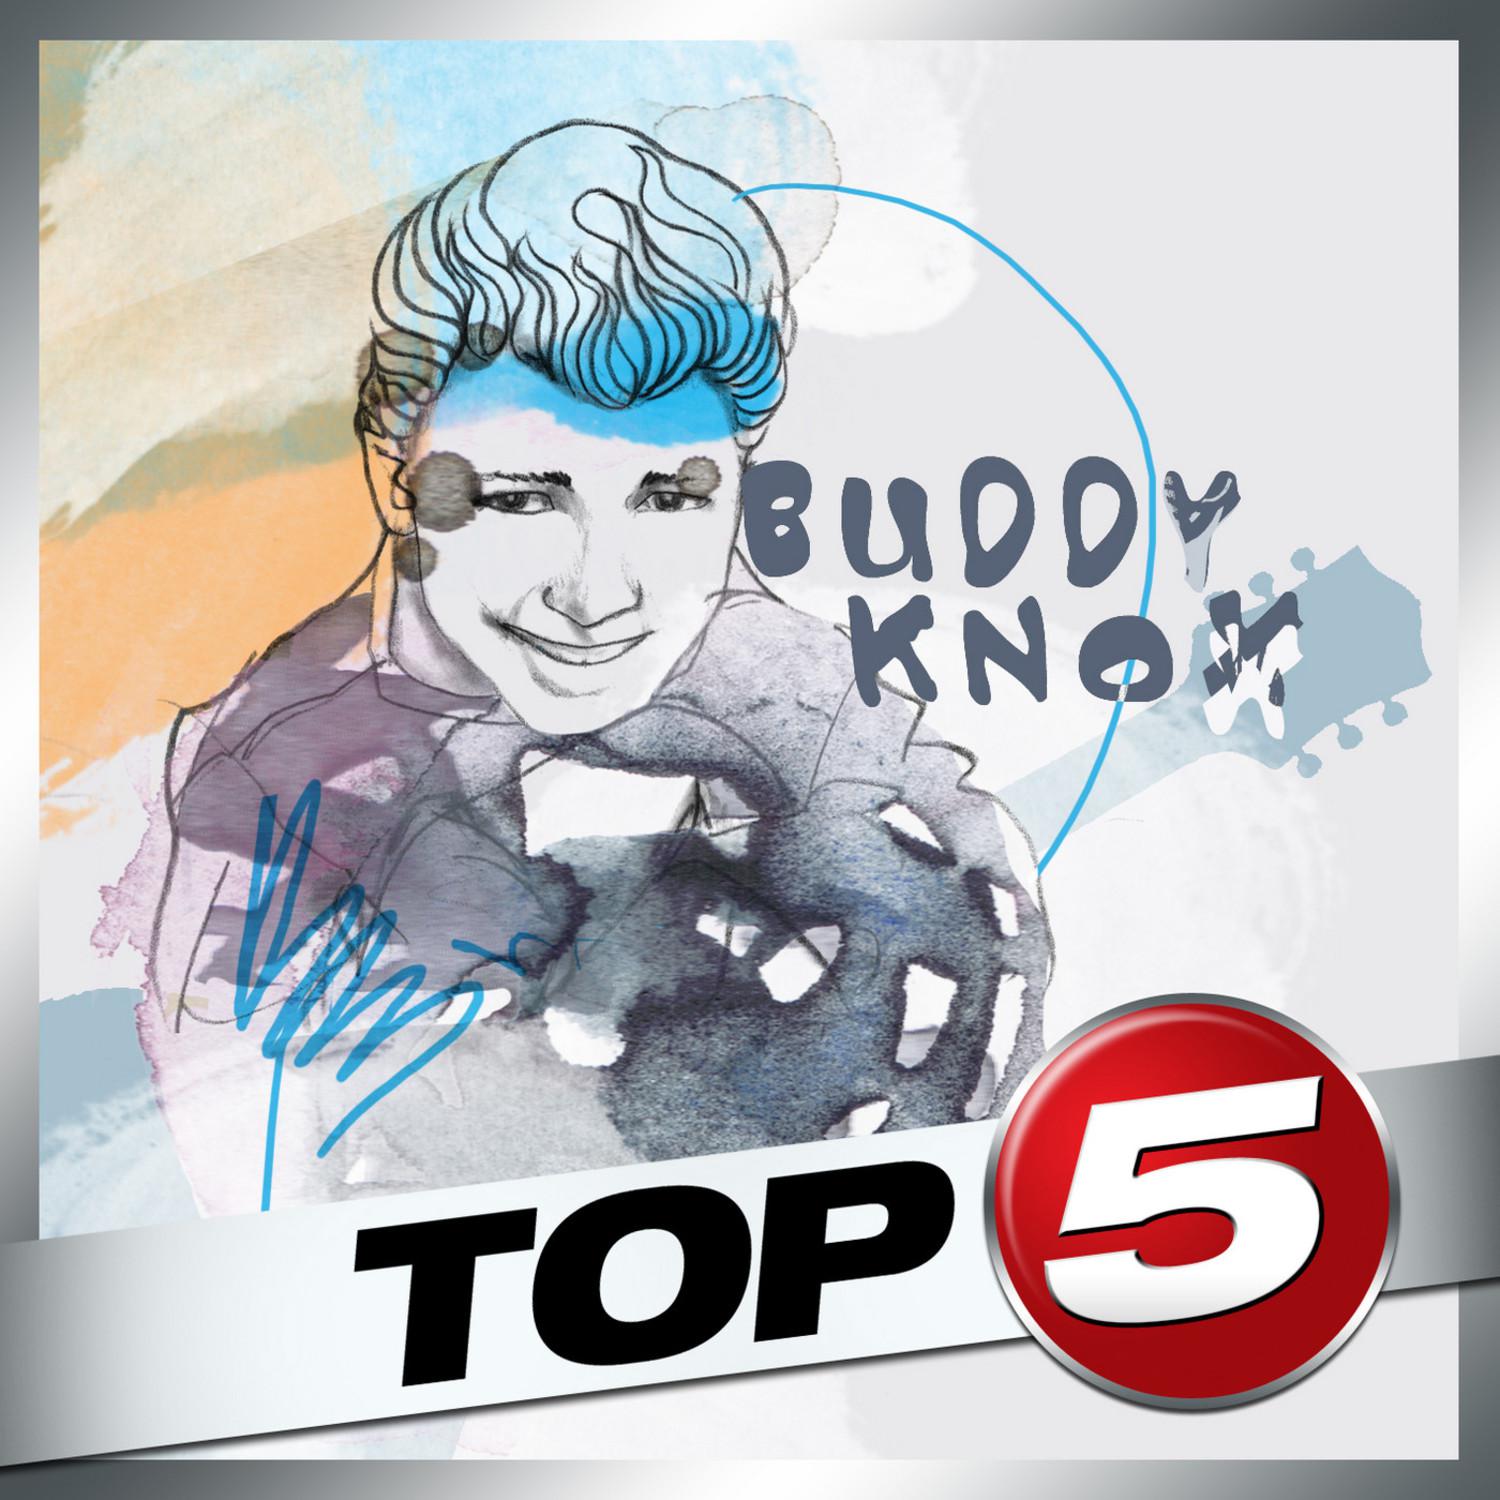 Top 5 - Buddy Knox - EP